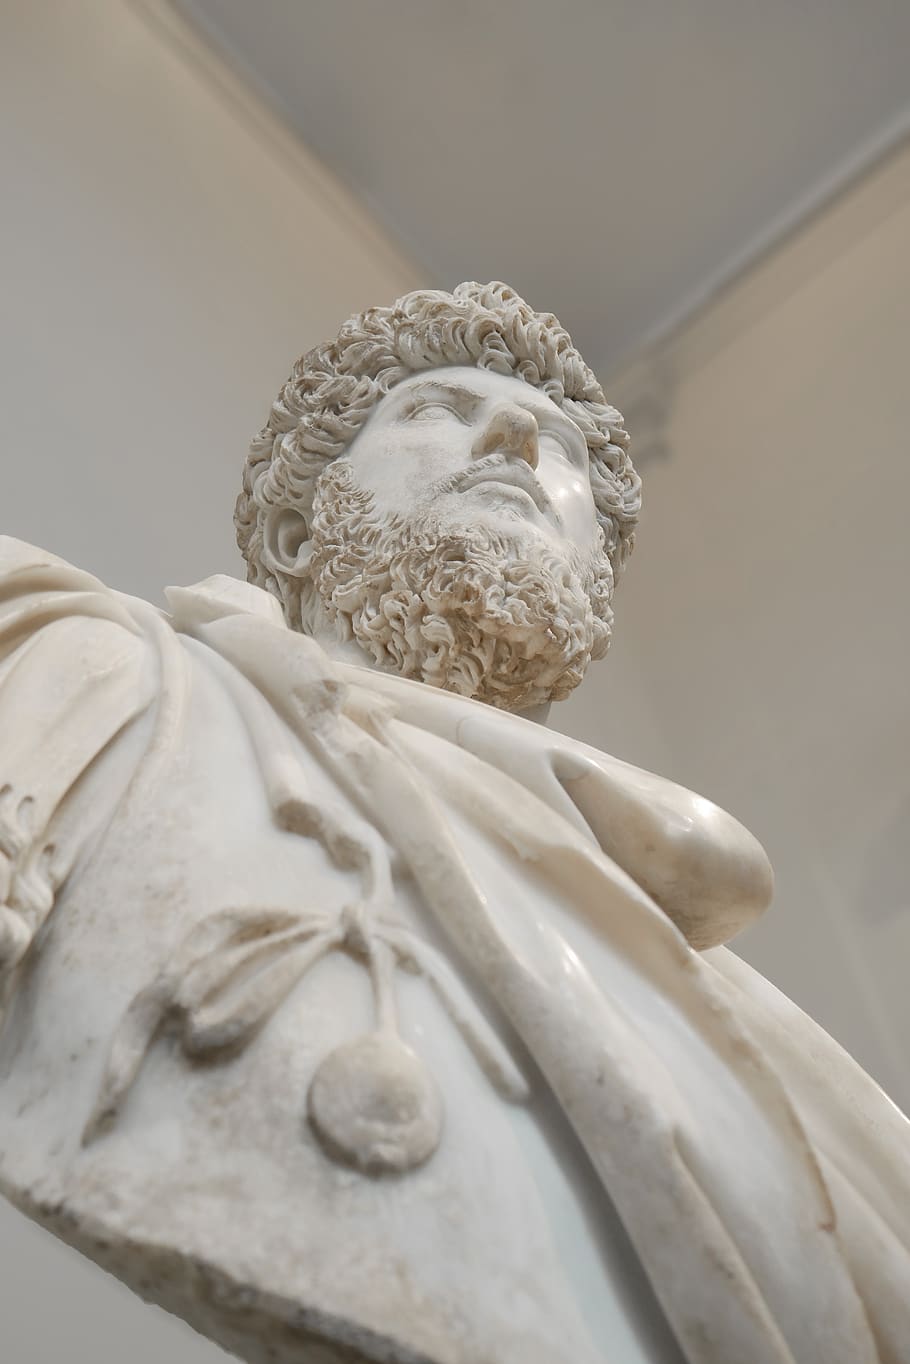 marble, statue, sculpture, symbol, art, decoration, old, greek, museum, metropolitan museum of art